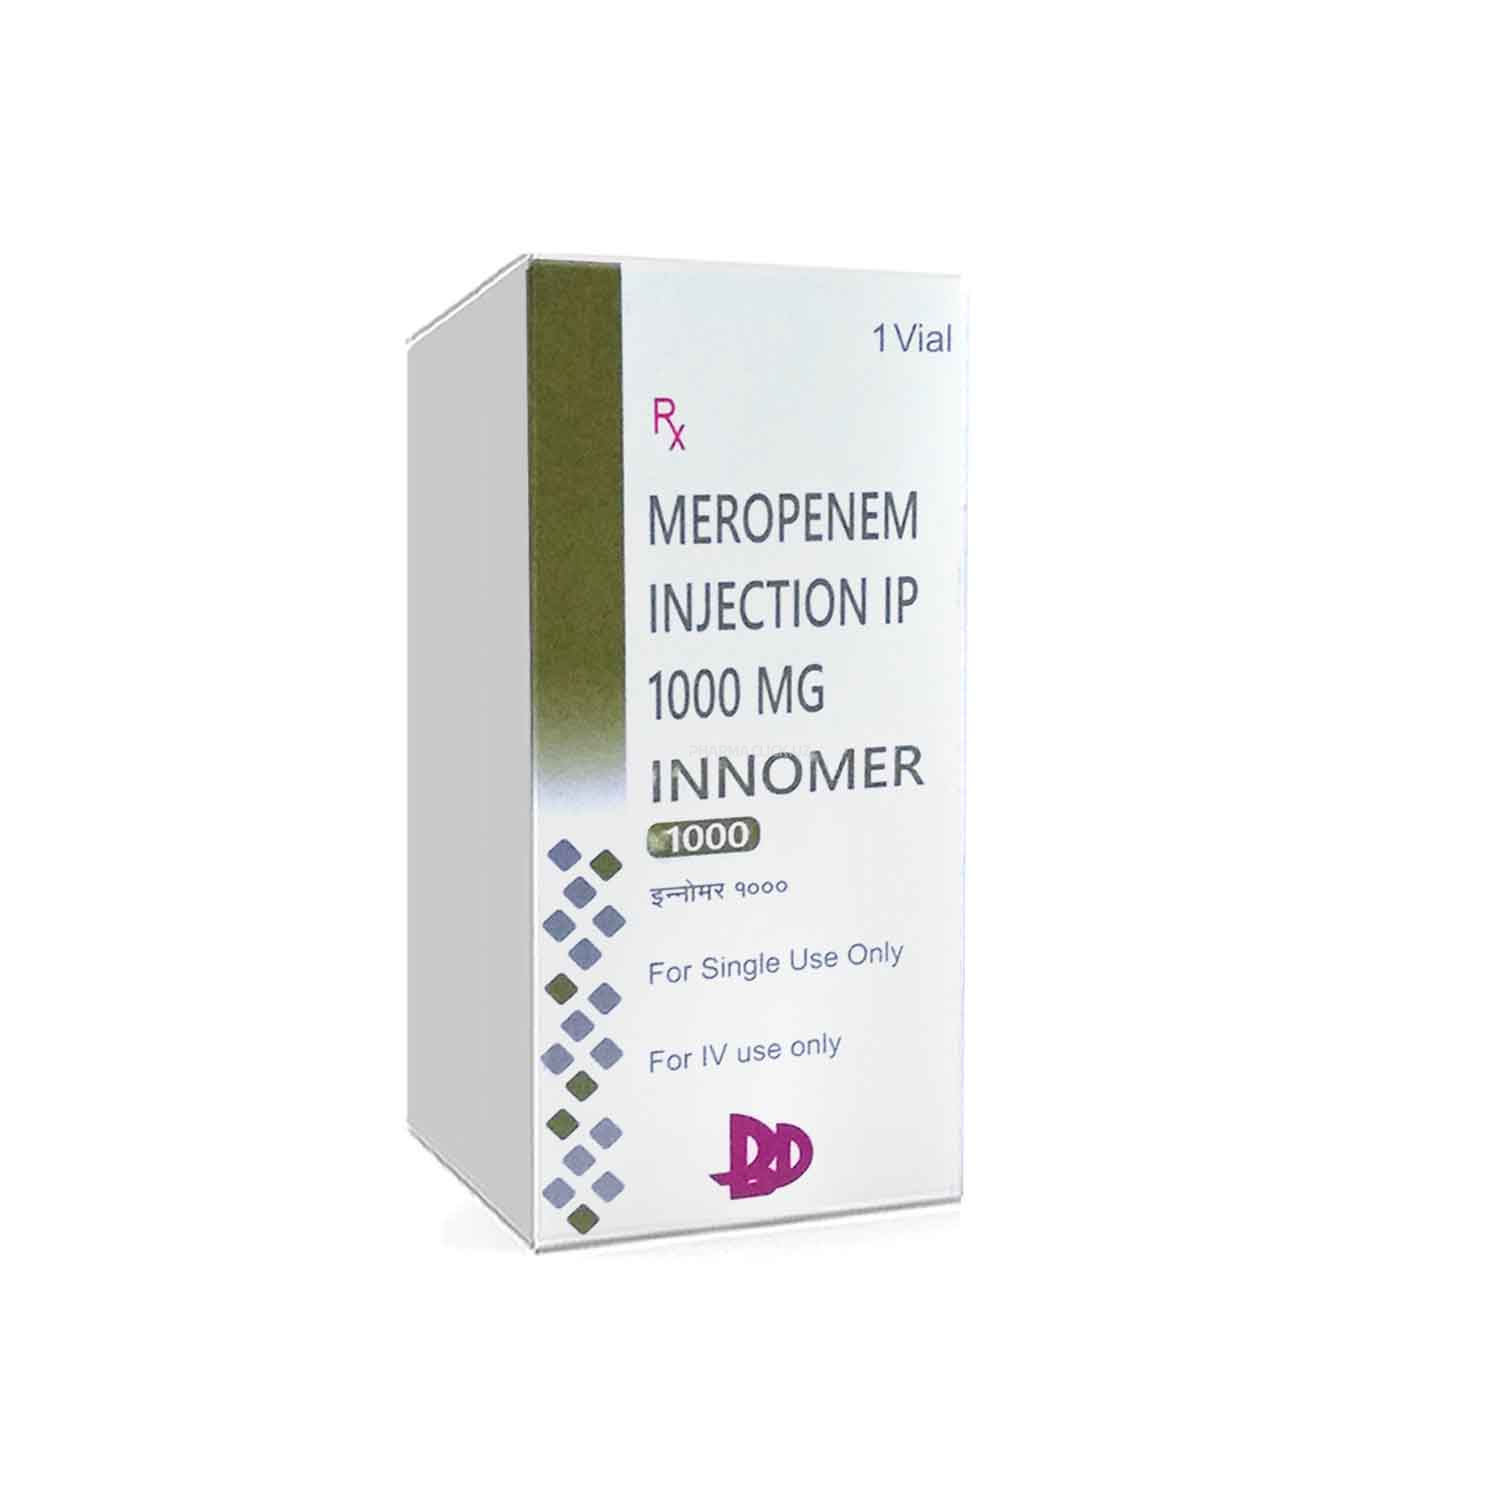 МЕРОПЕНЕМ 1000 мг для инъекц  Инномер 1000 №1